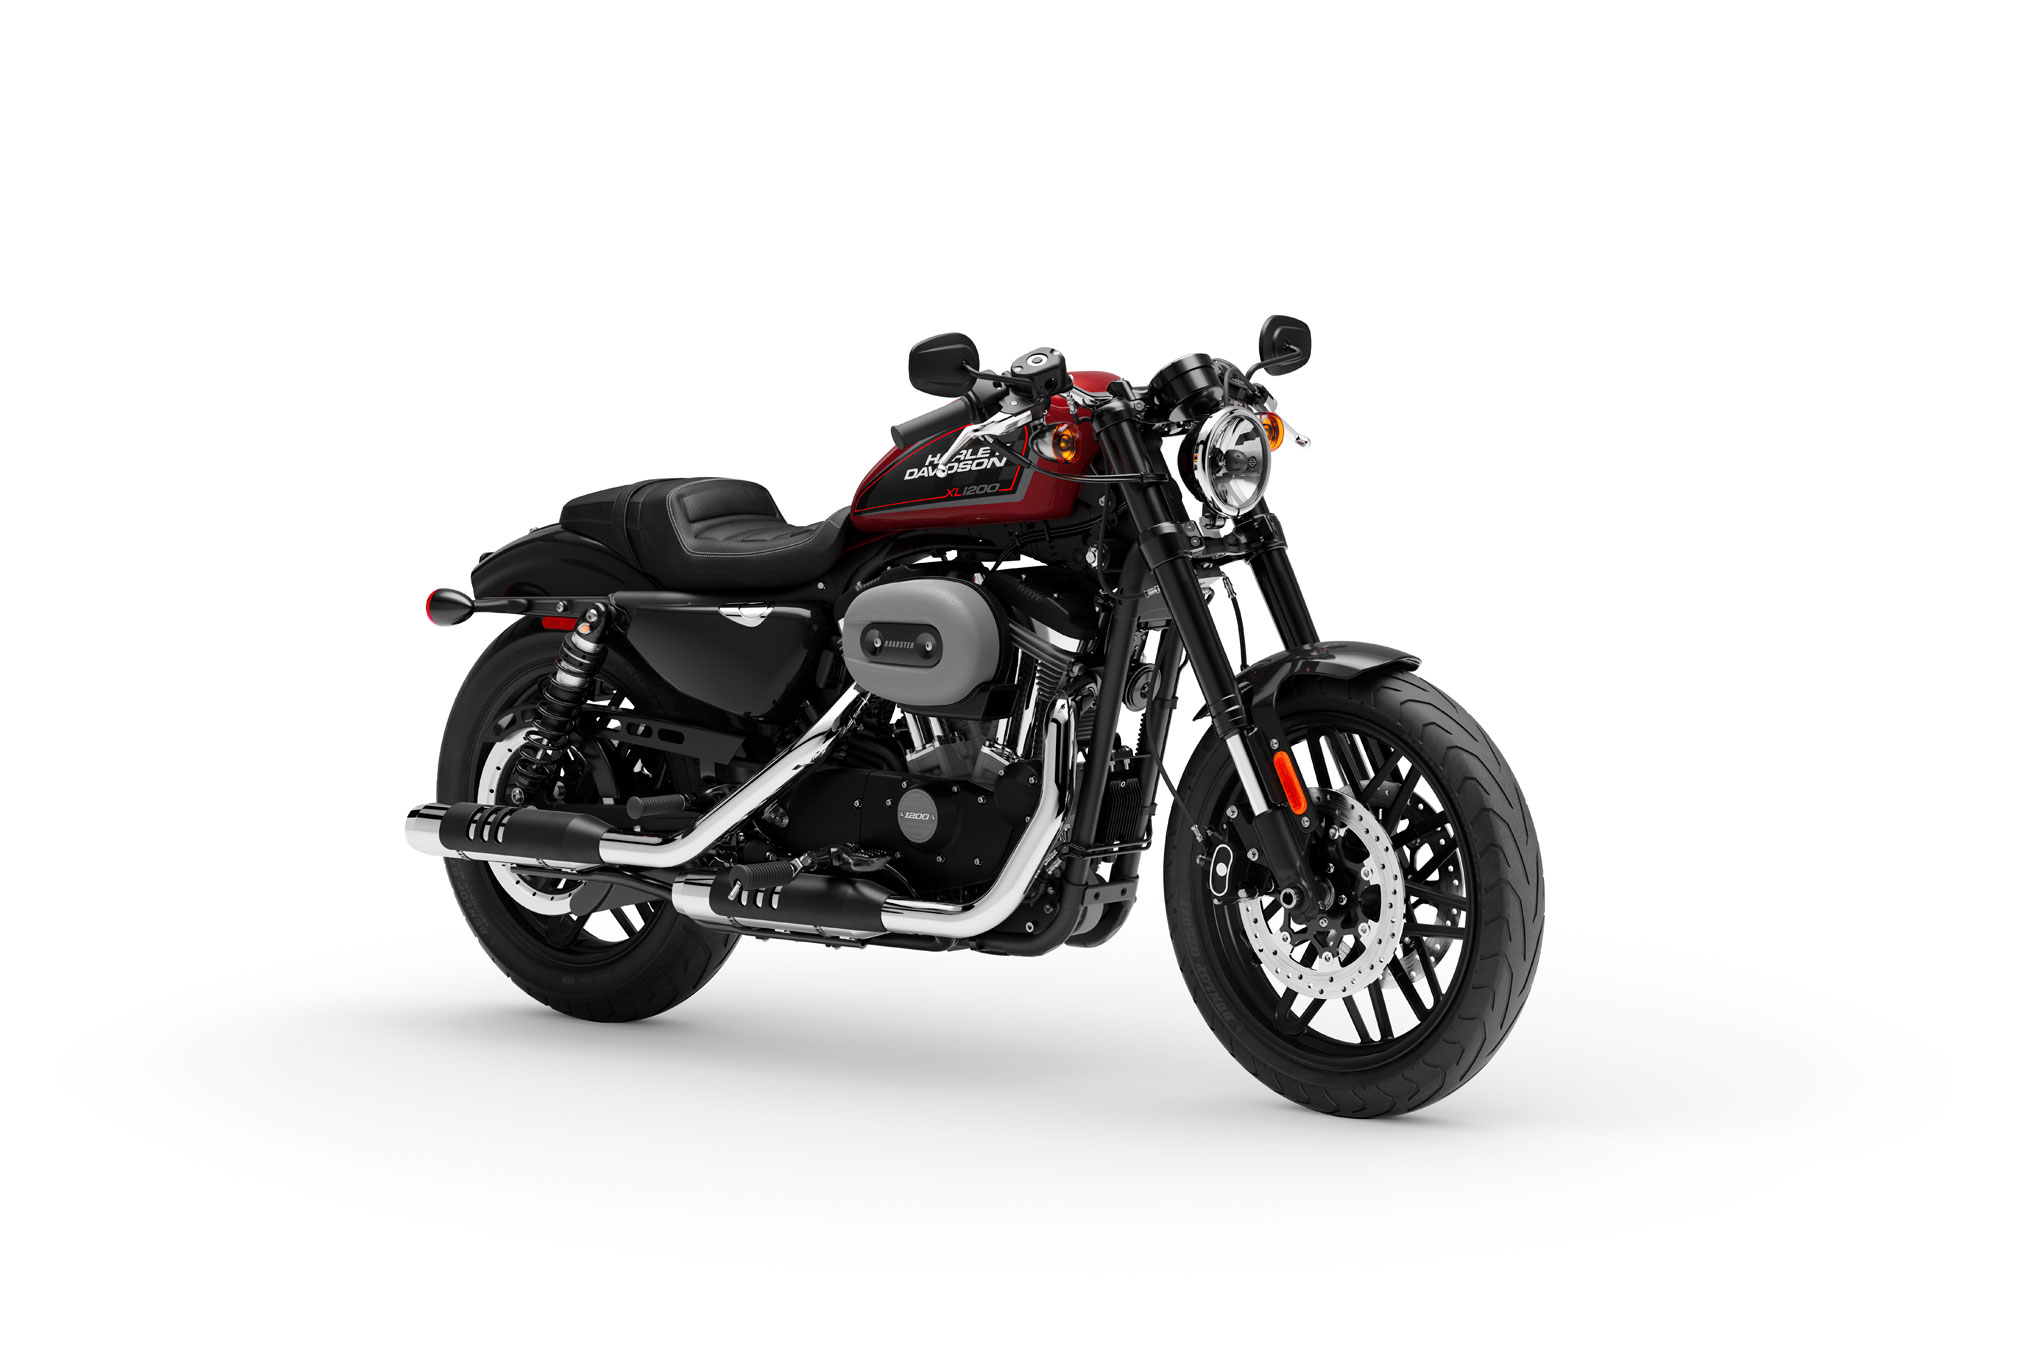 2019 Harley Davidson Roadster Guide Total Motorcycle